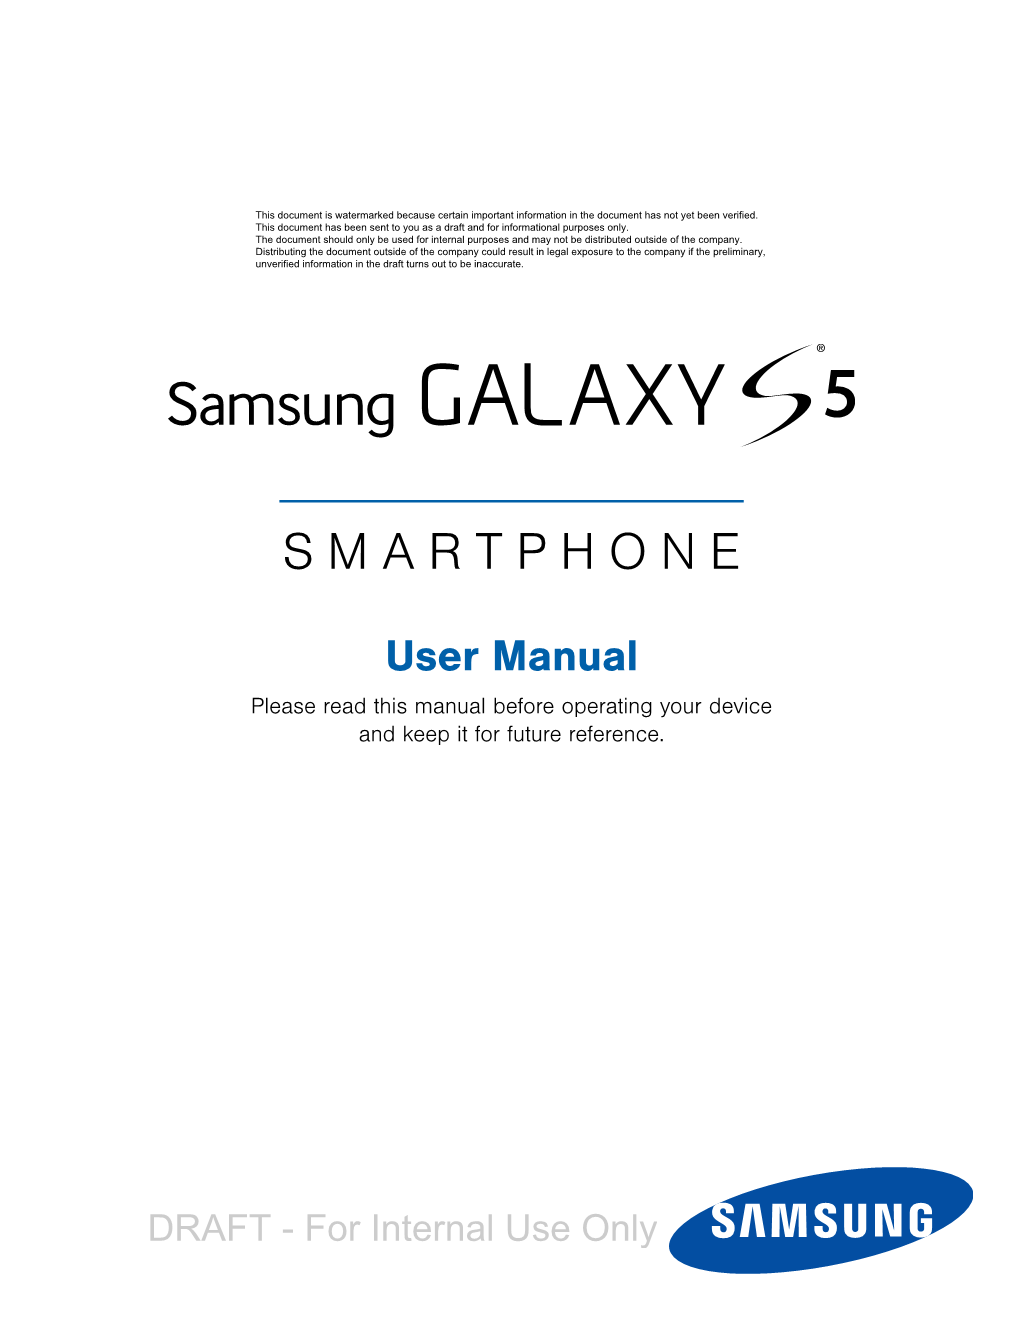 Samsung-Galaxy-S5-Userguide.Pdf